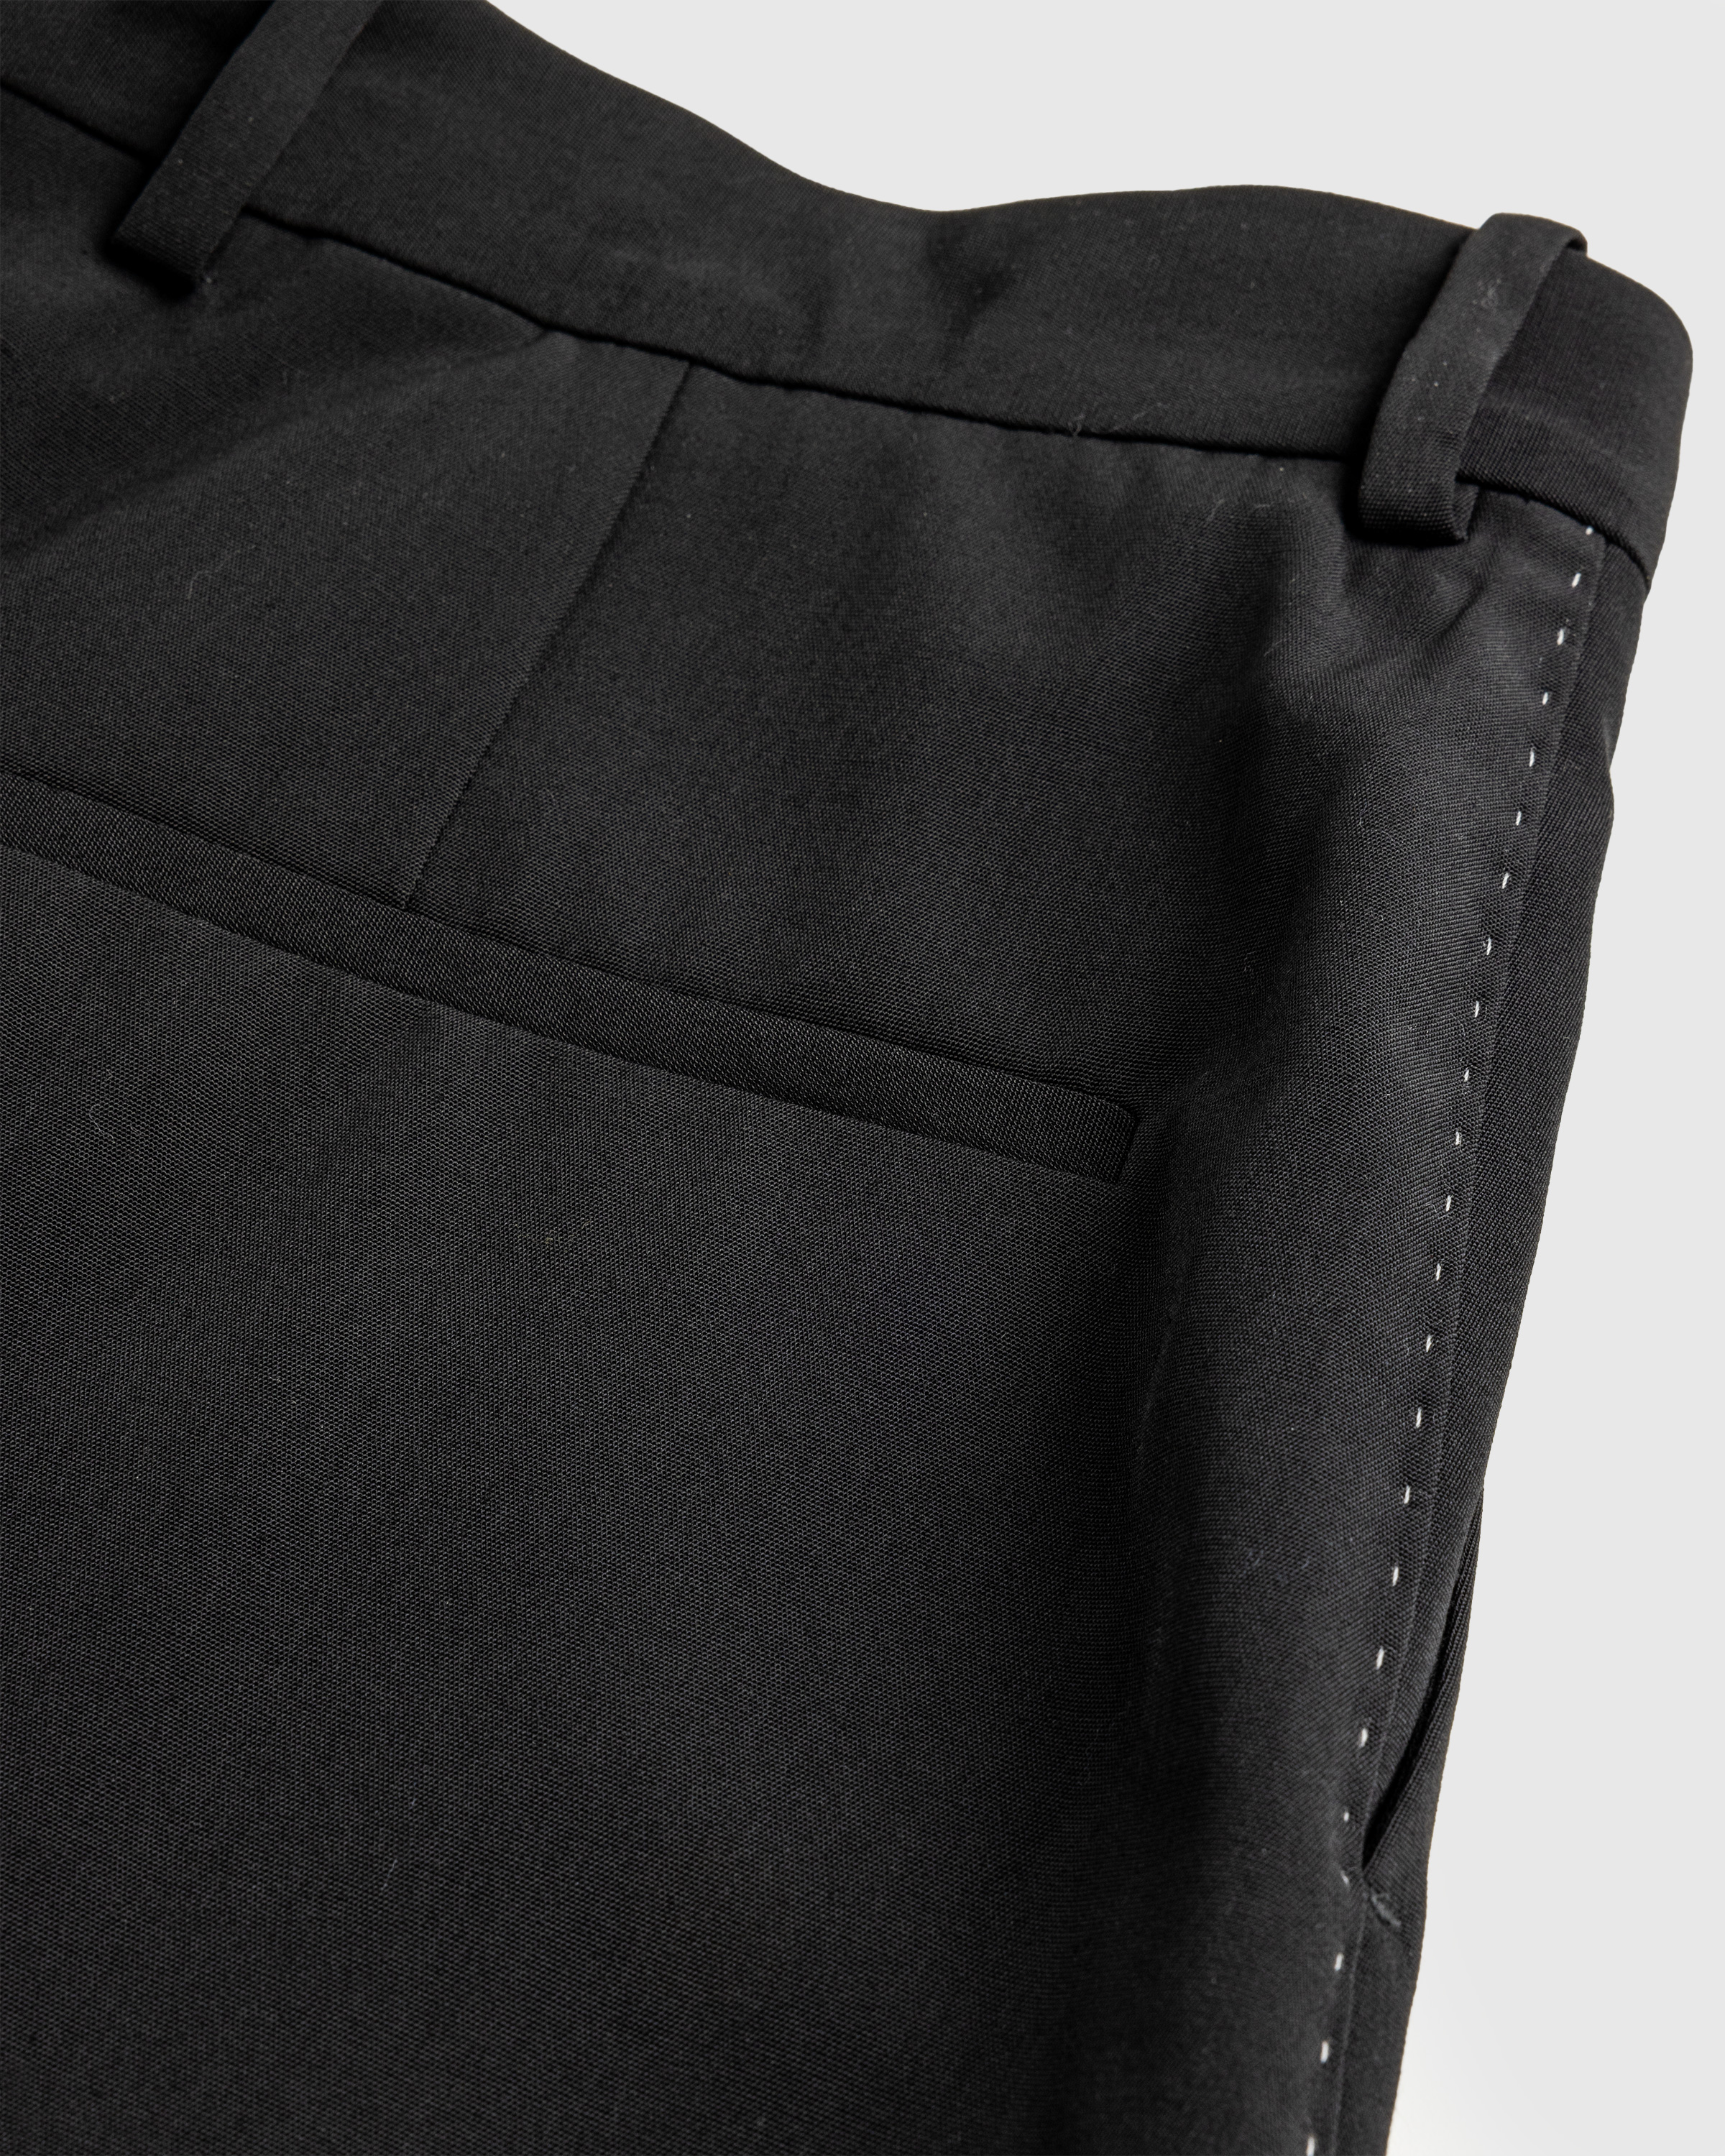 Acne Studios – Wool Trousers Black - Trousers - Black - Image 7